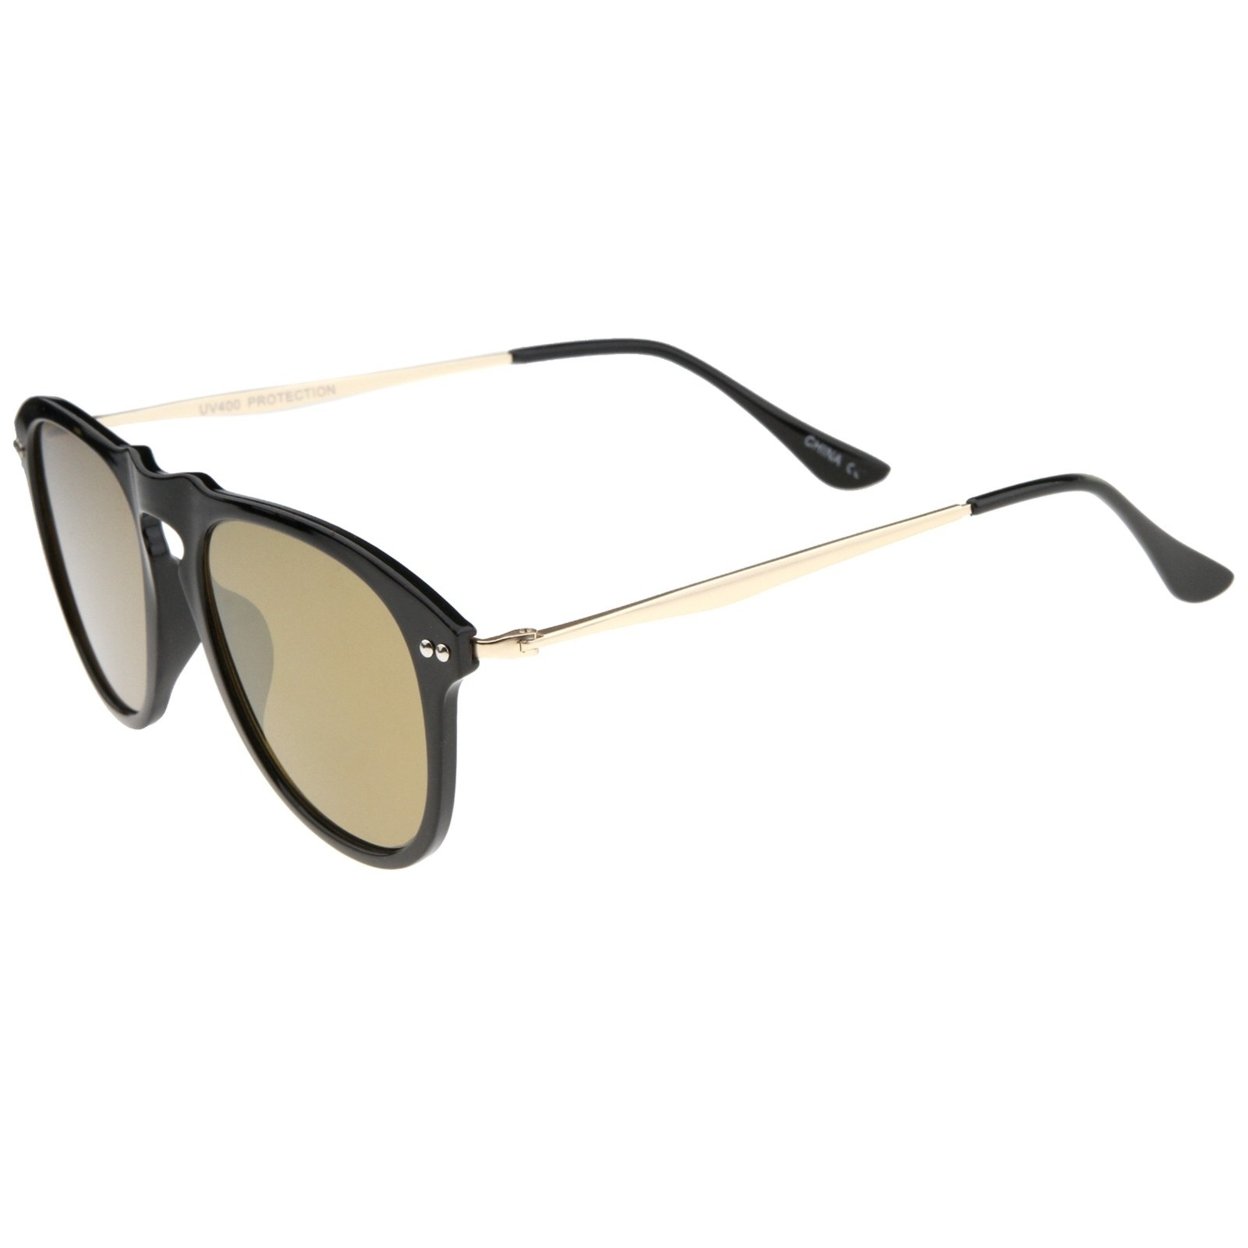 Modern Keyhole Bridge Horn Rimmed Colored Mirror Lens Aviator Sunglasses 53mm - Black-Gold / Gold Mirror